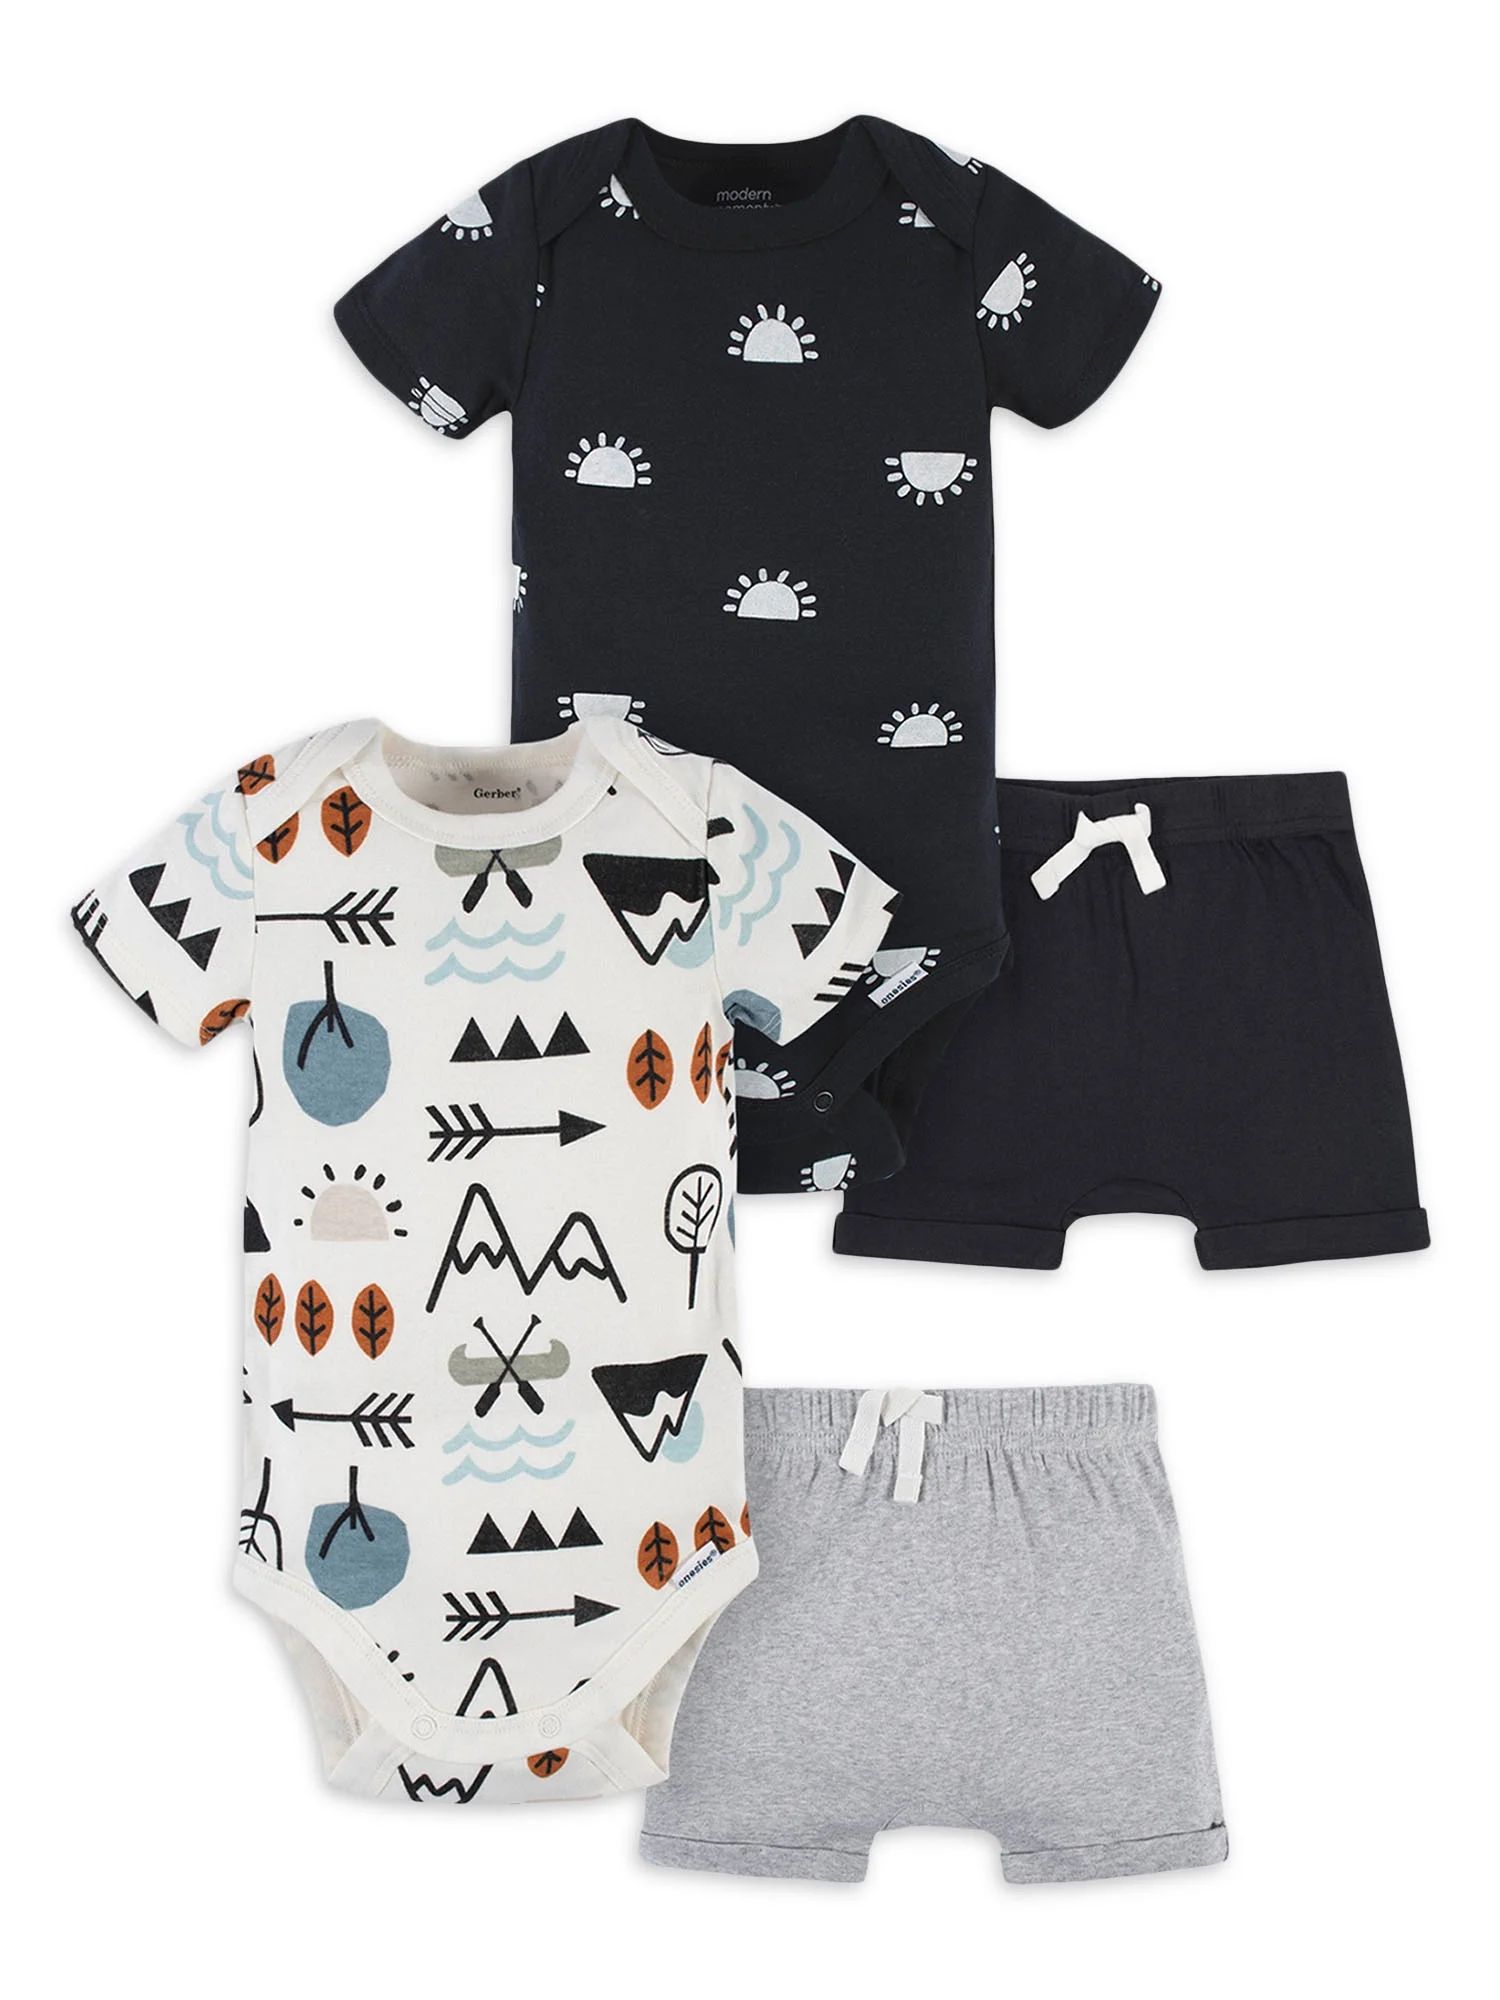 Modern Moments by Gerber Baby Boy Bodysuits & Shorts Outfit Set, 4-Piece (Newborn-12 Months) | Walmart (US)